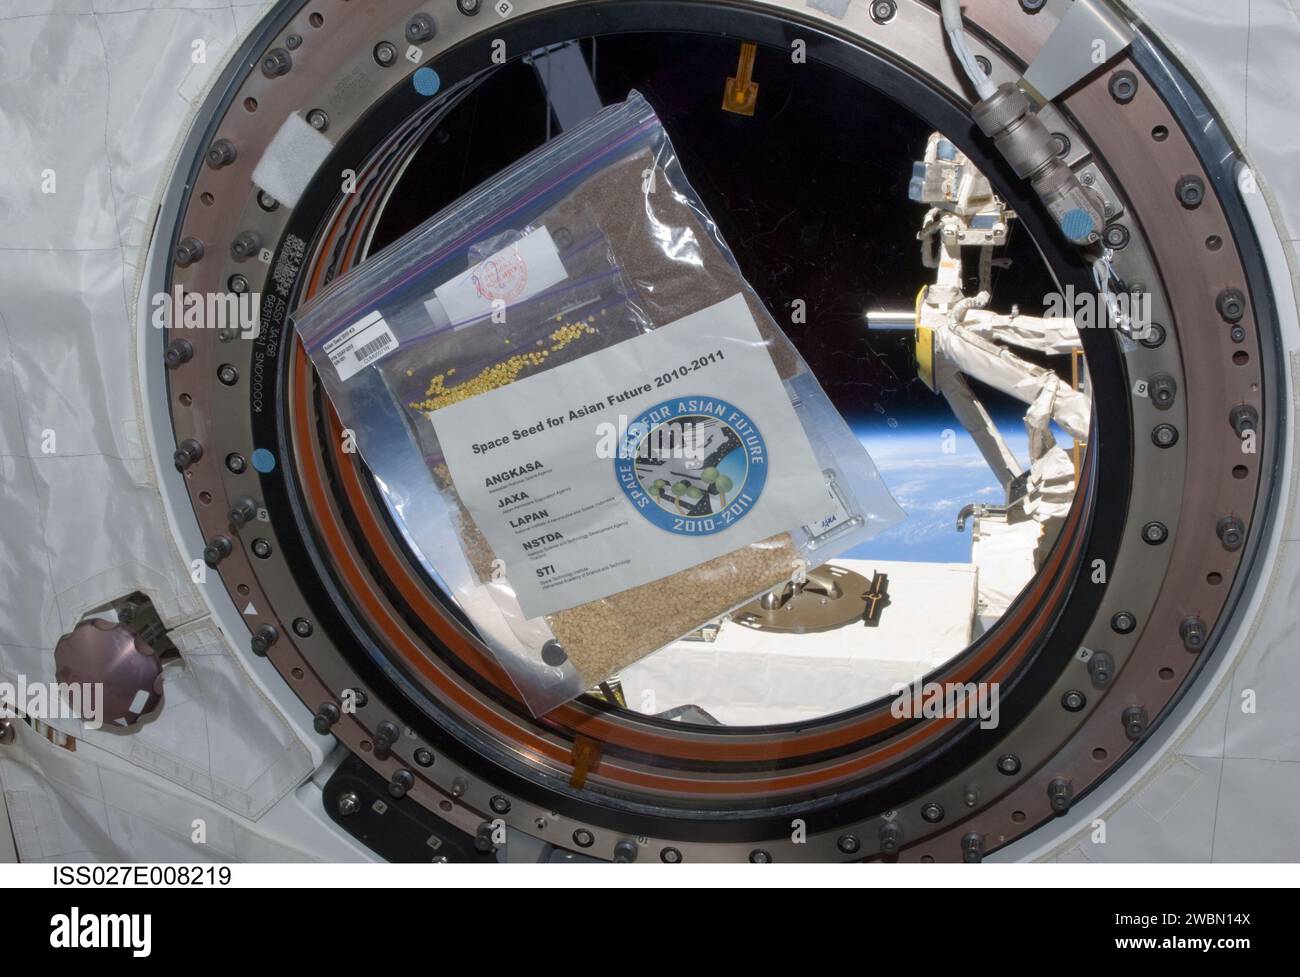 Iss027e008219 (26.3.2011) --- Fotodokumentation der Nutzlast des Asian Seed Package, fotografiert im Kibo Japanese Experiment Pressurized Module (JPM) an Bord der Internationalen Raumstation ISS. Stockfoto